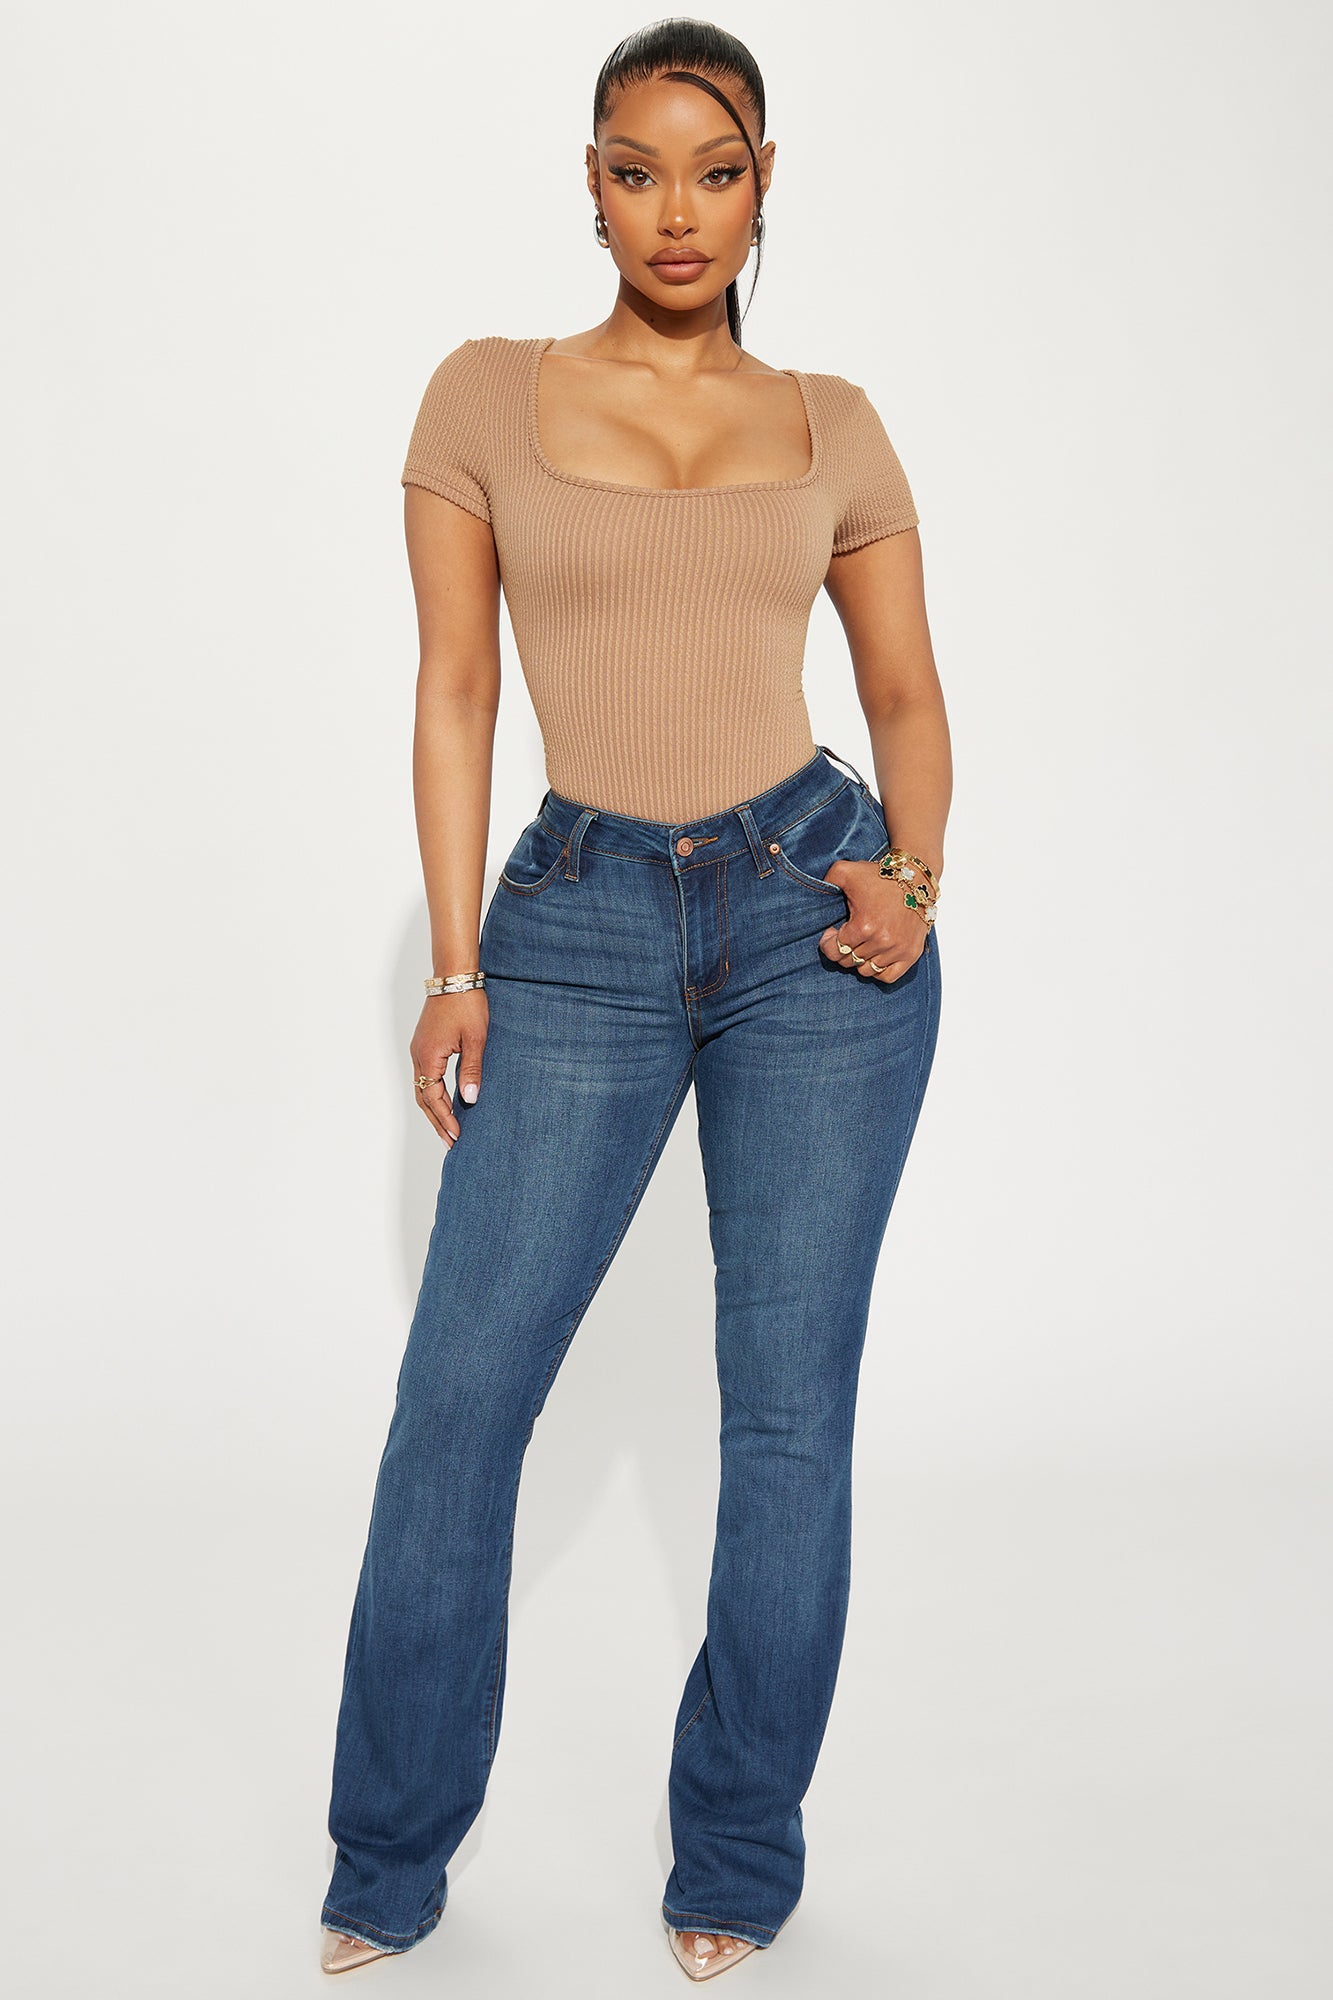 Jessie Mid Rise Bootcut Jeans - Dark Wash, Fashion Nova, Jeans